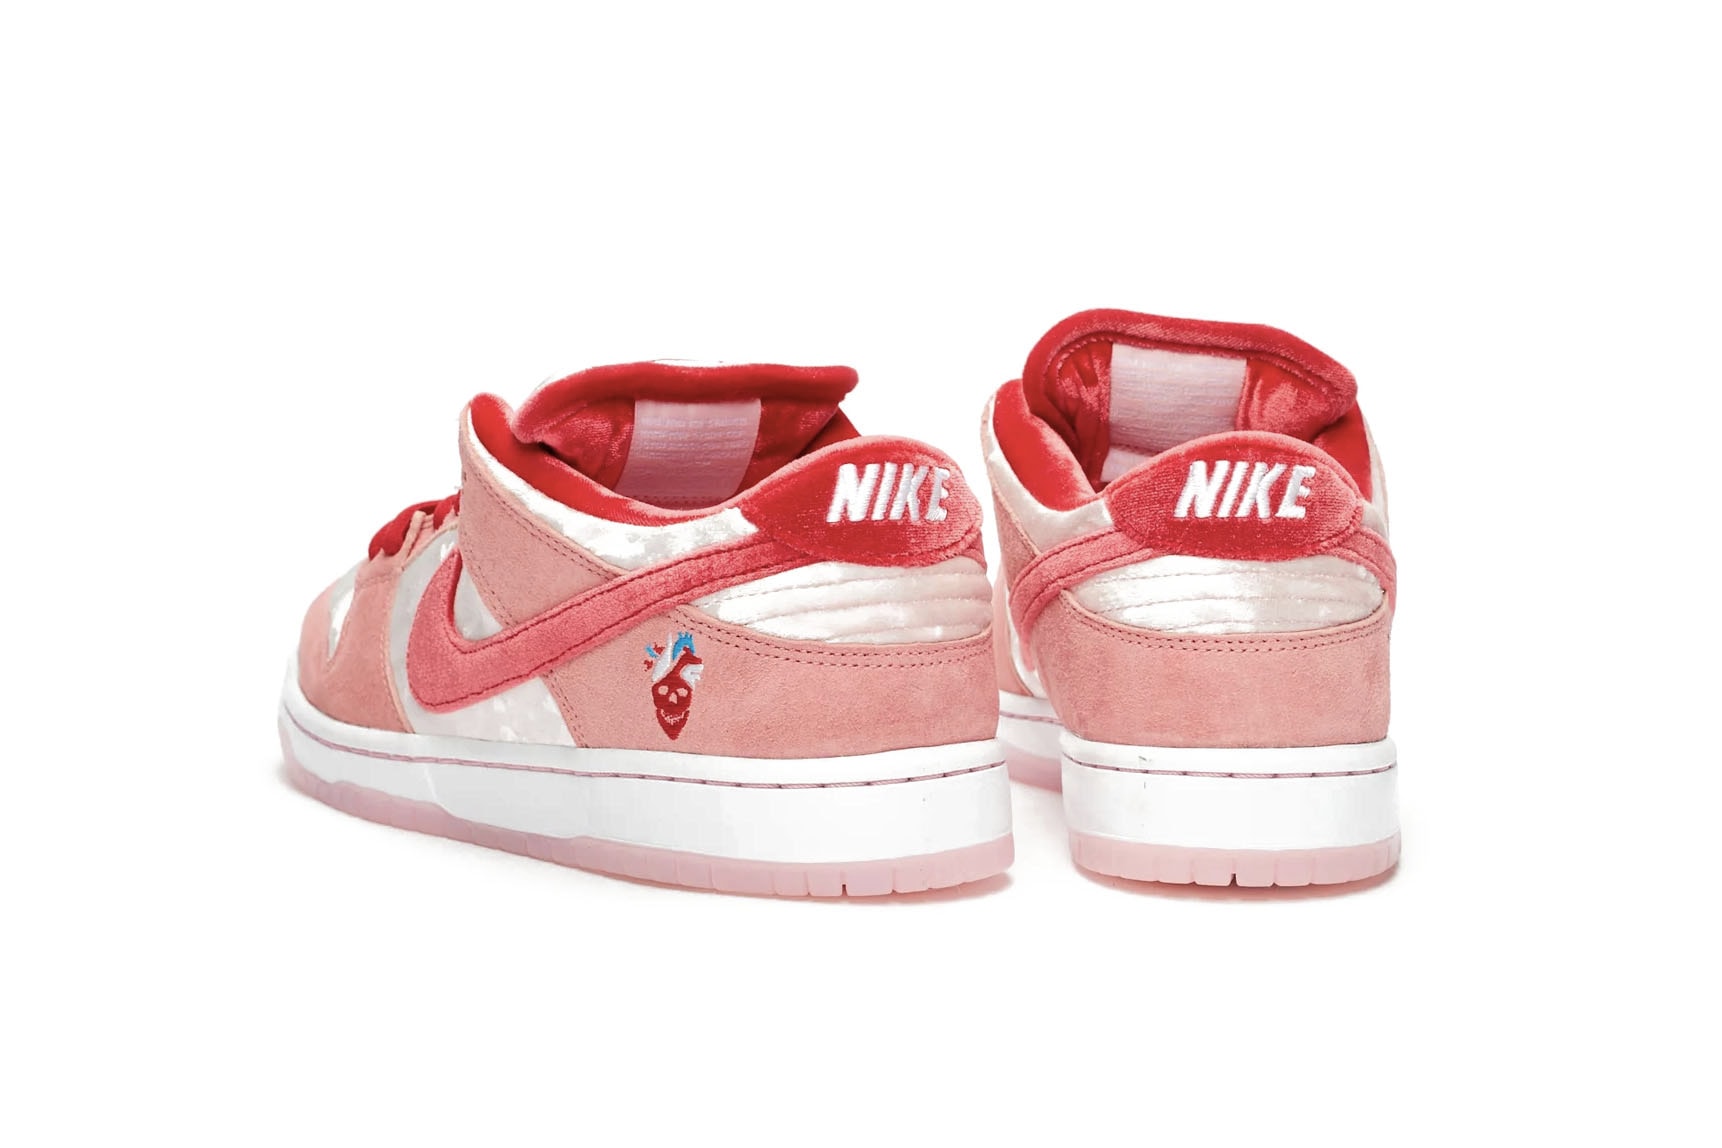 Nike SB Dunk Low "Bright Melon" Sneaker Release 